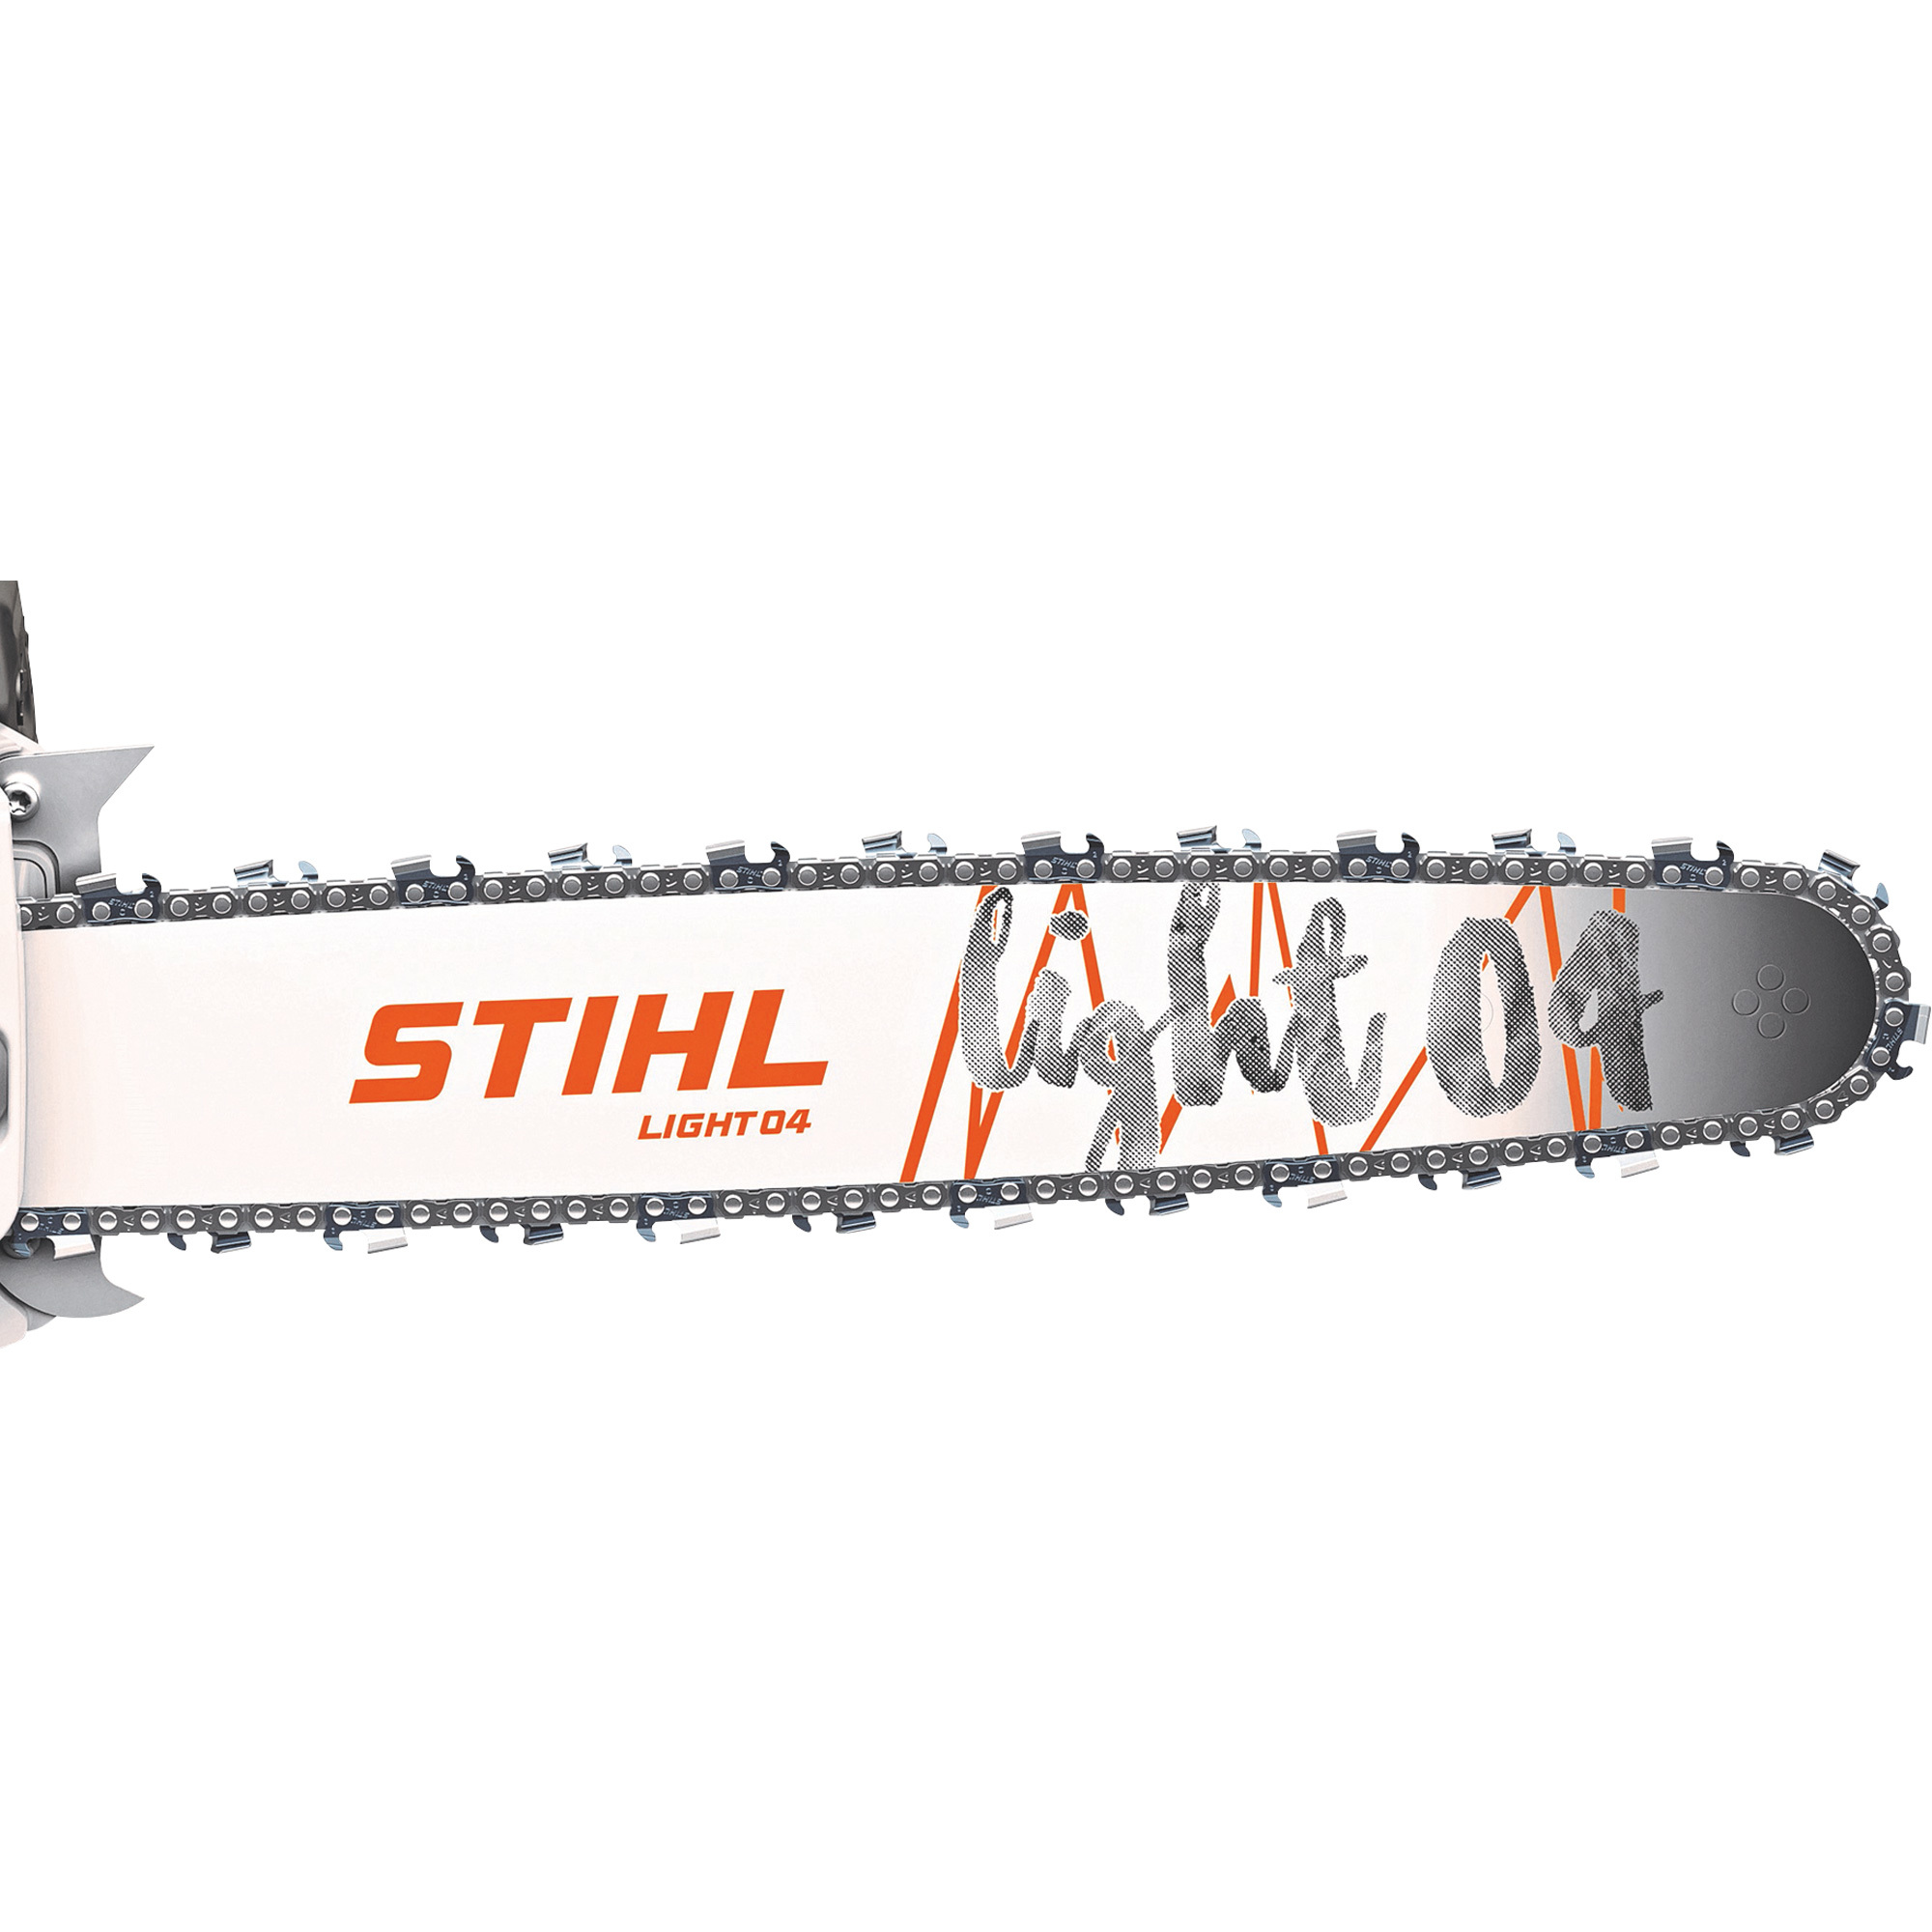 STIHL Light 04 Chainsaw Guide Bar, 18Inch Bar Length, Model 3003 008 3317